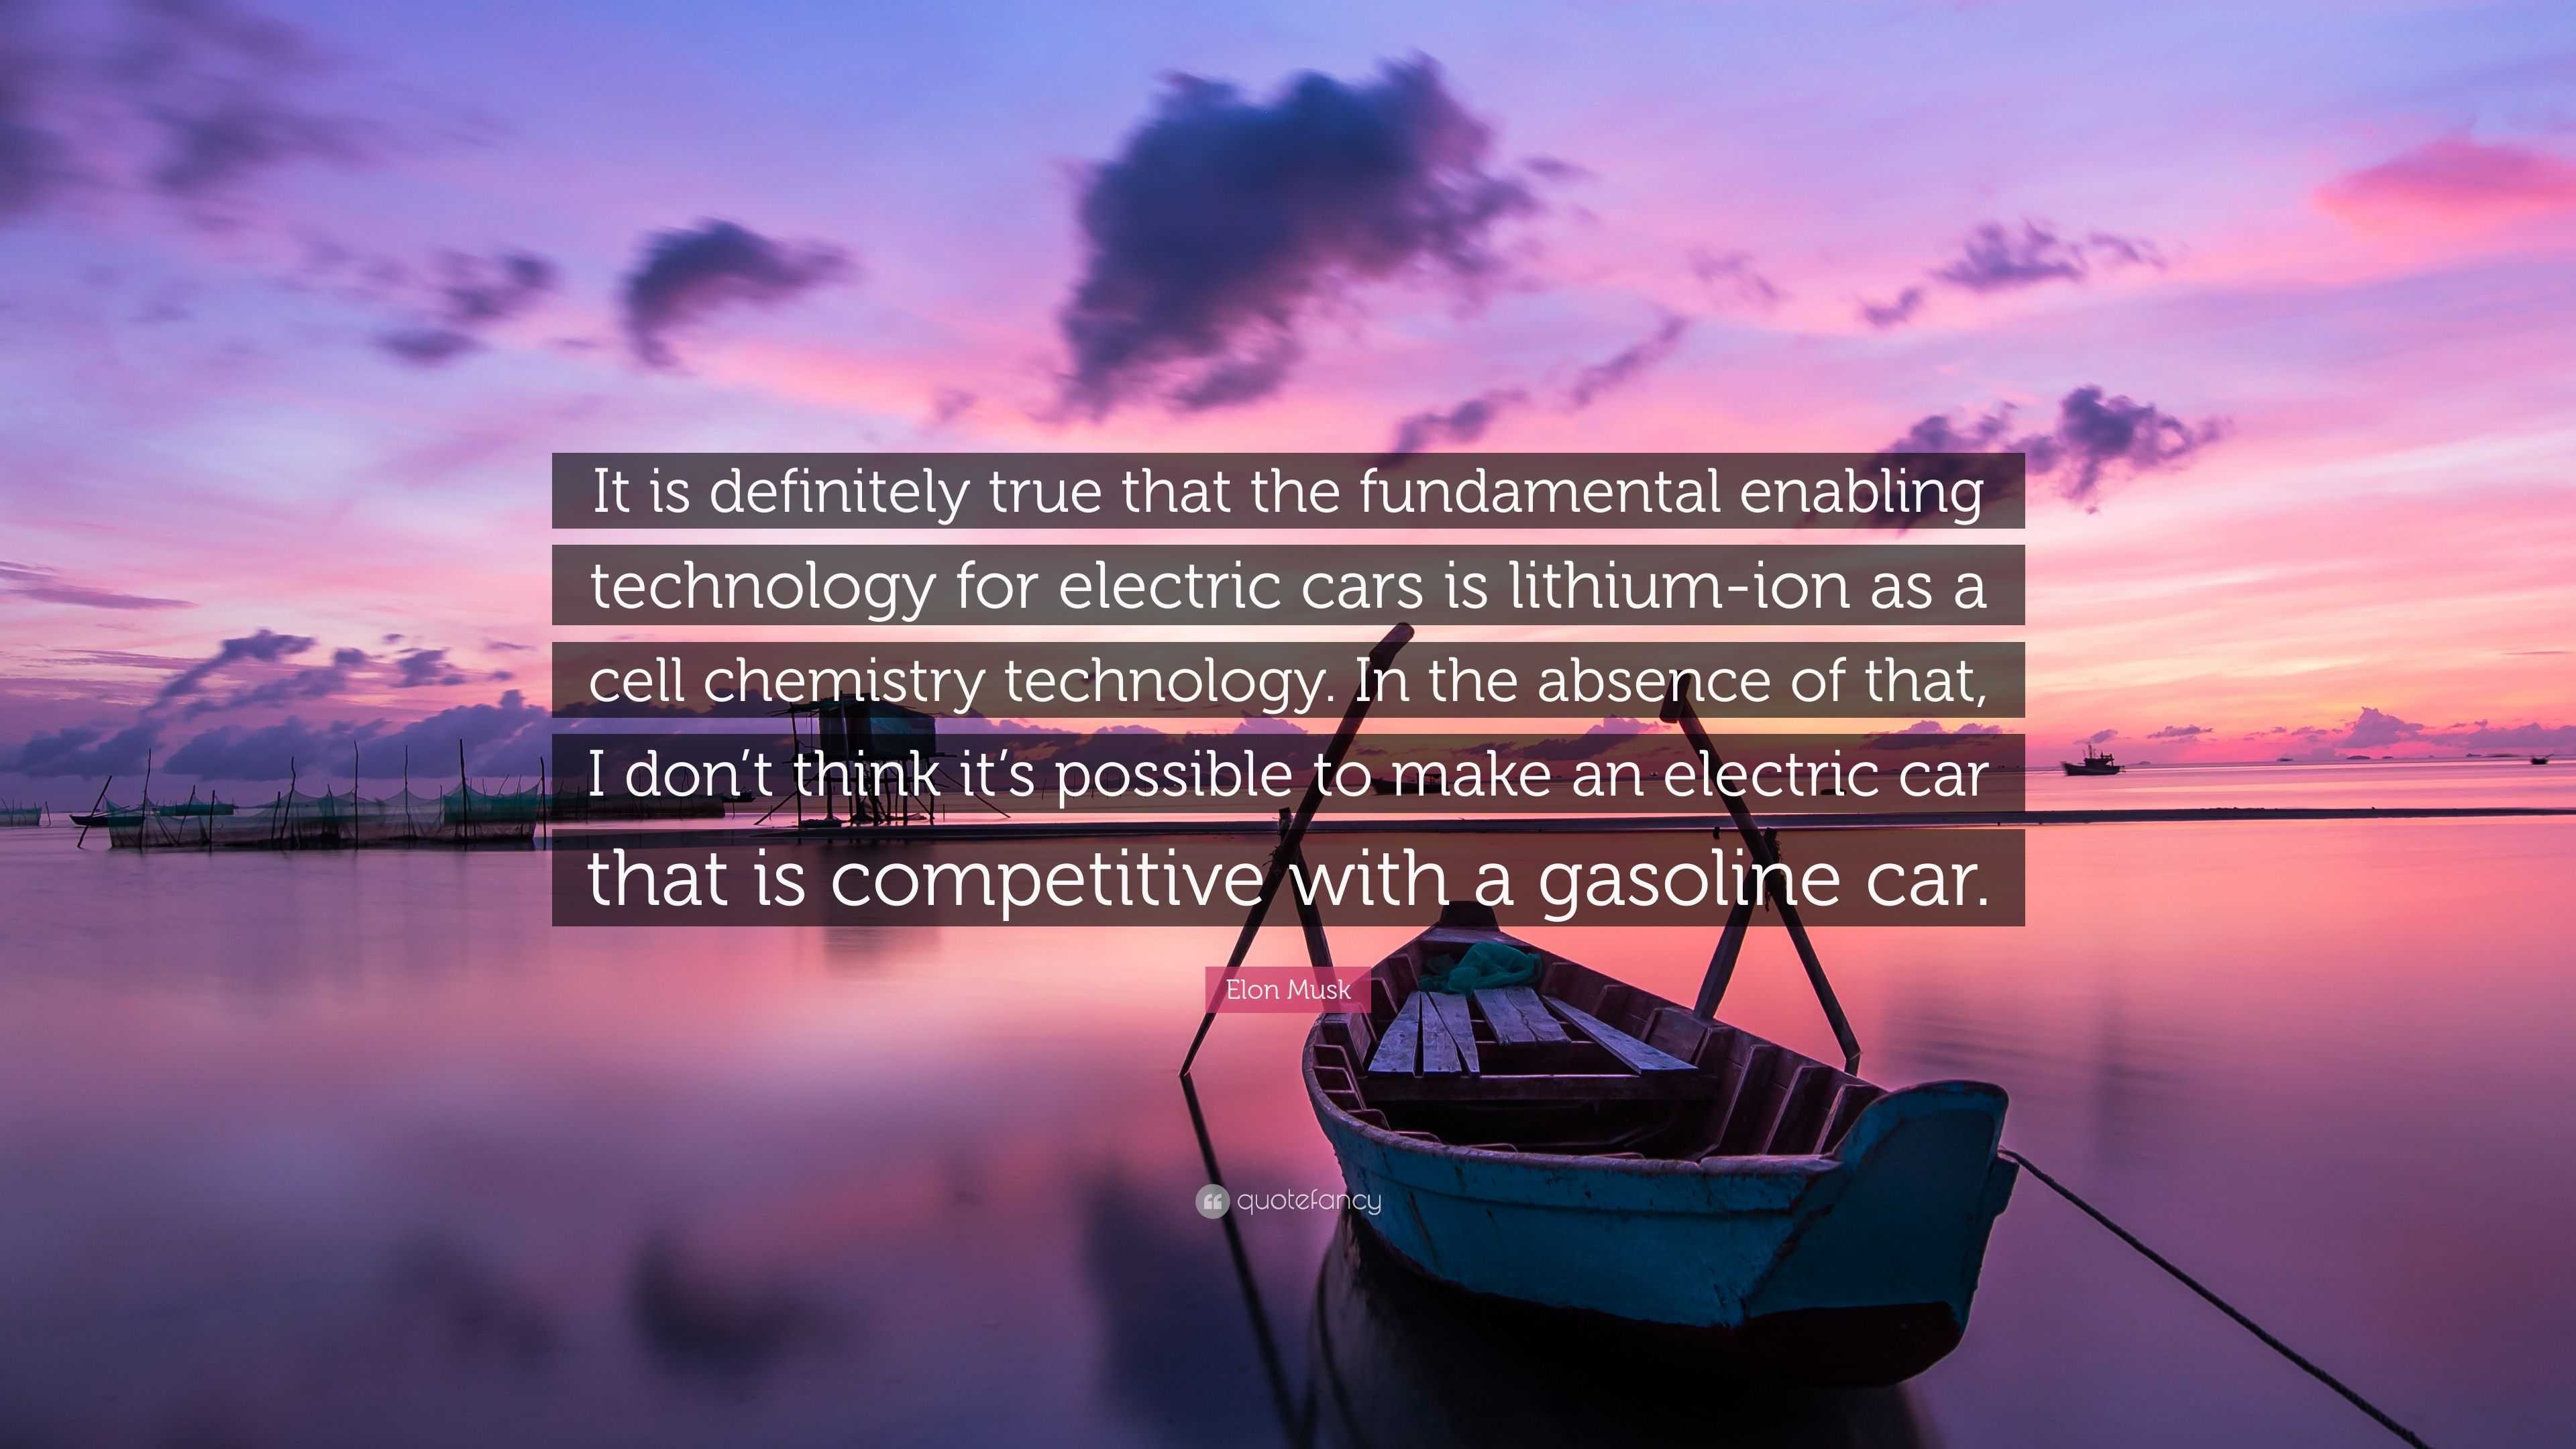 Elon Musk Quote “It is definitely true that the fundamental enabling